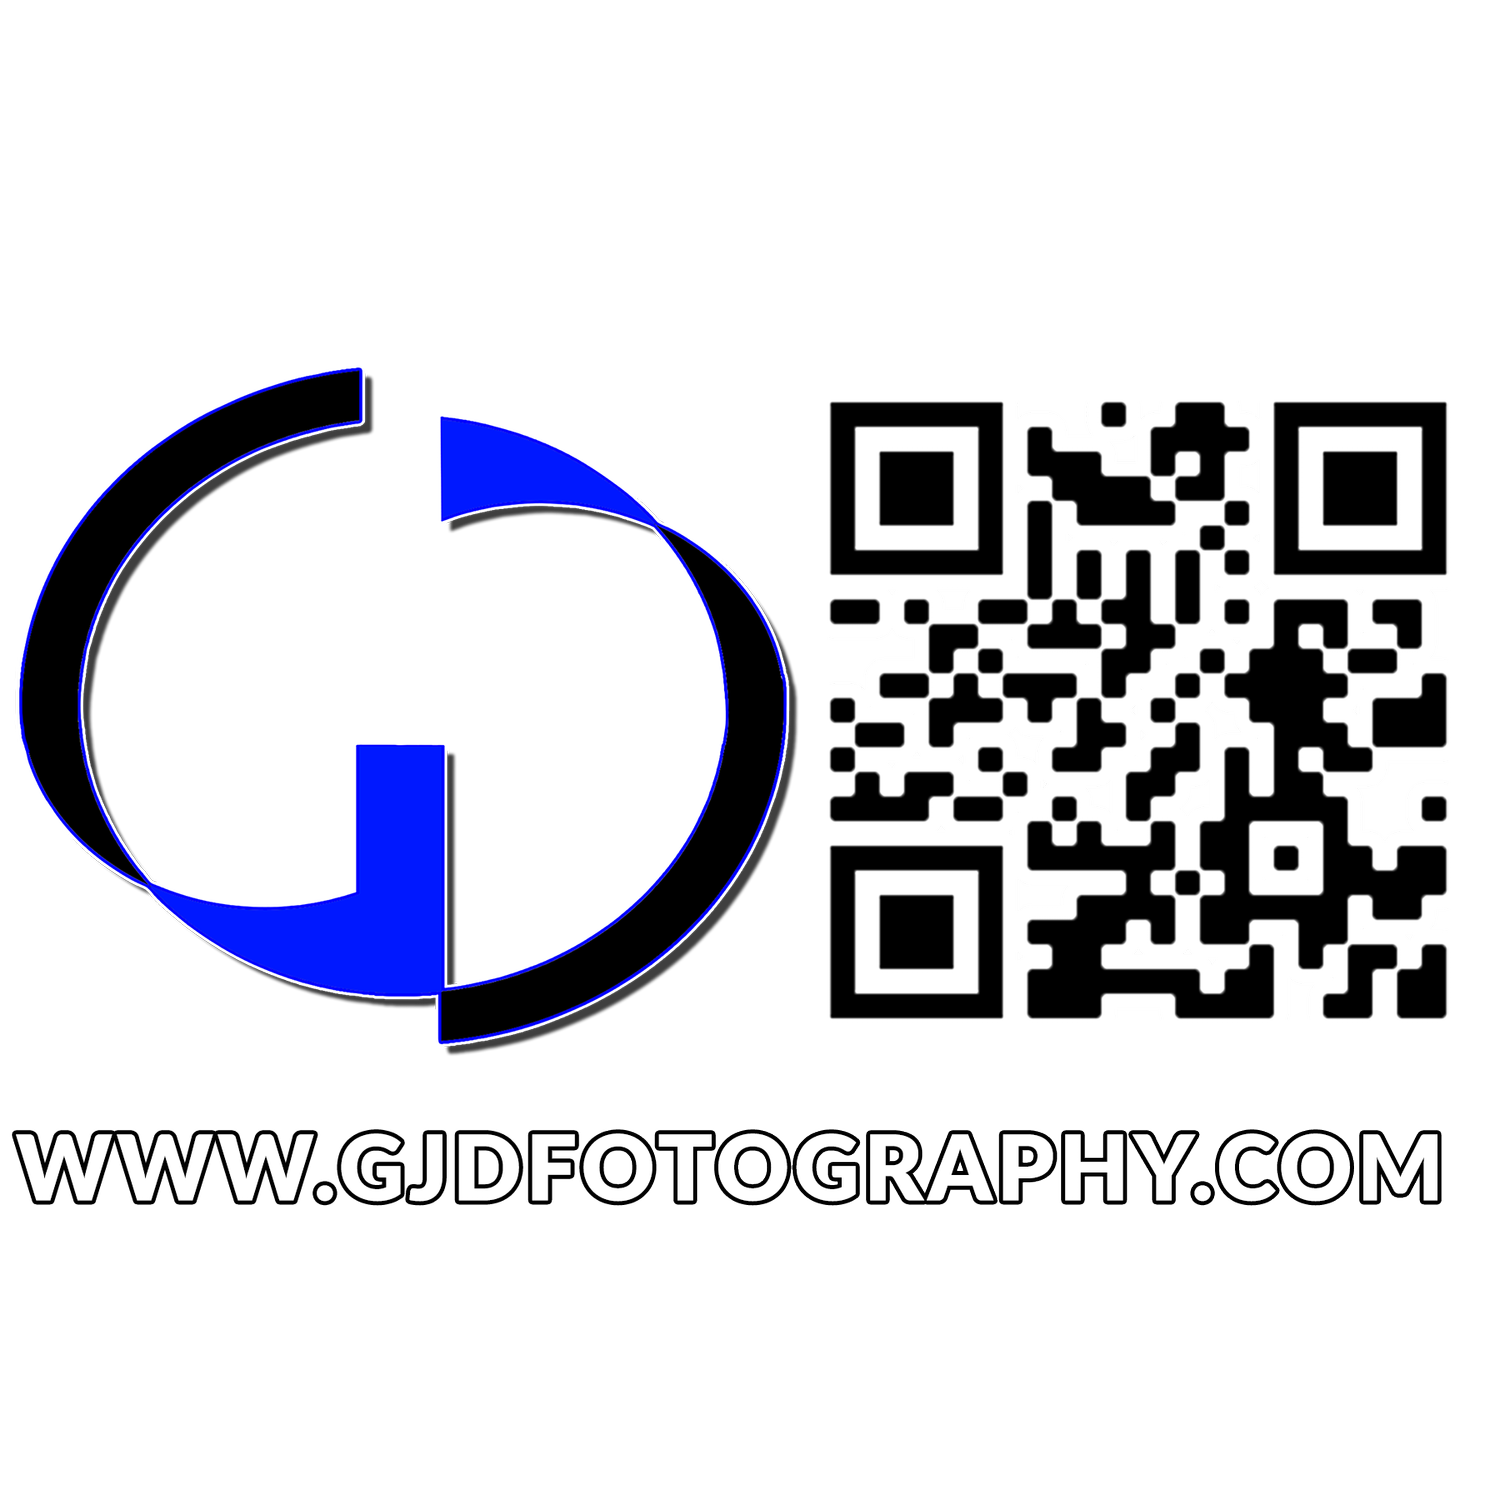 GJD Fotography LLC